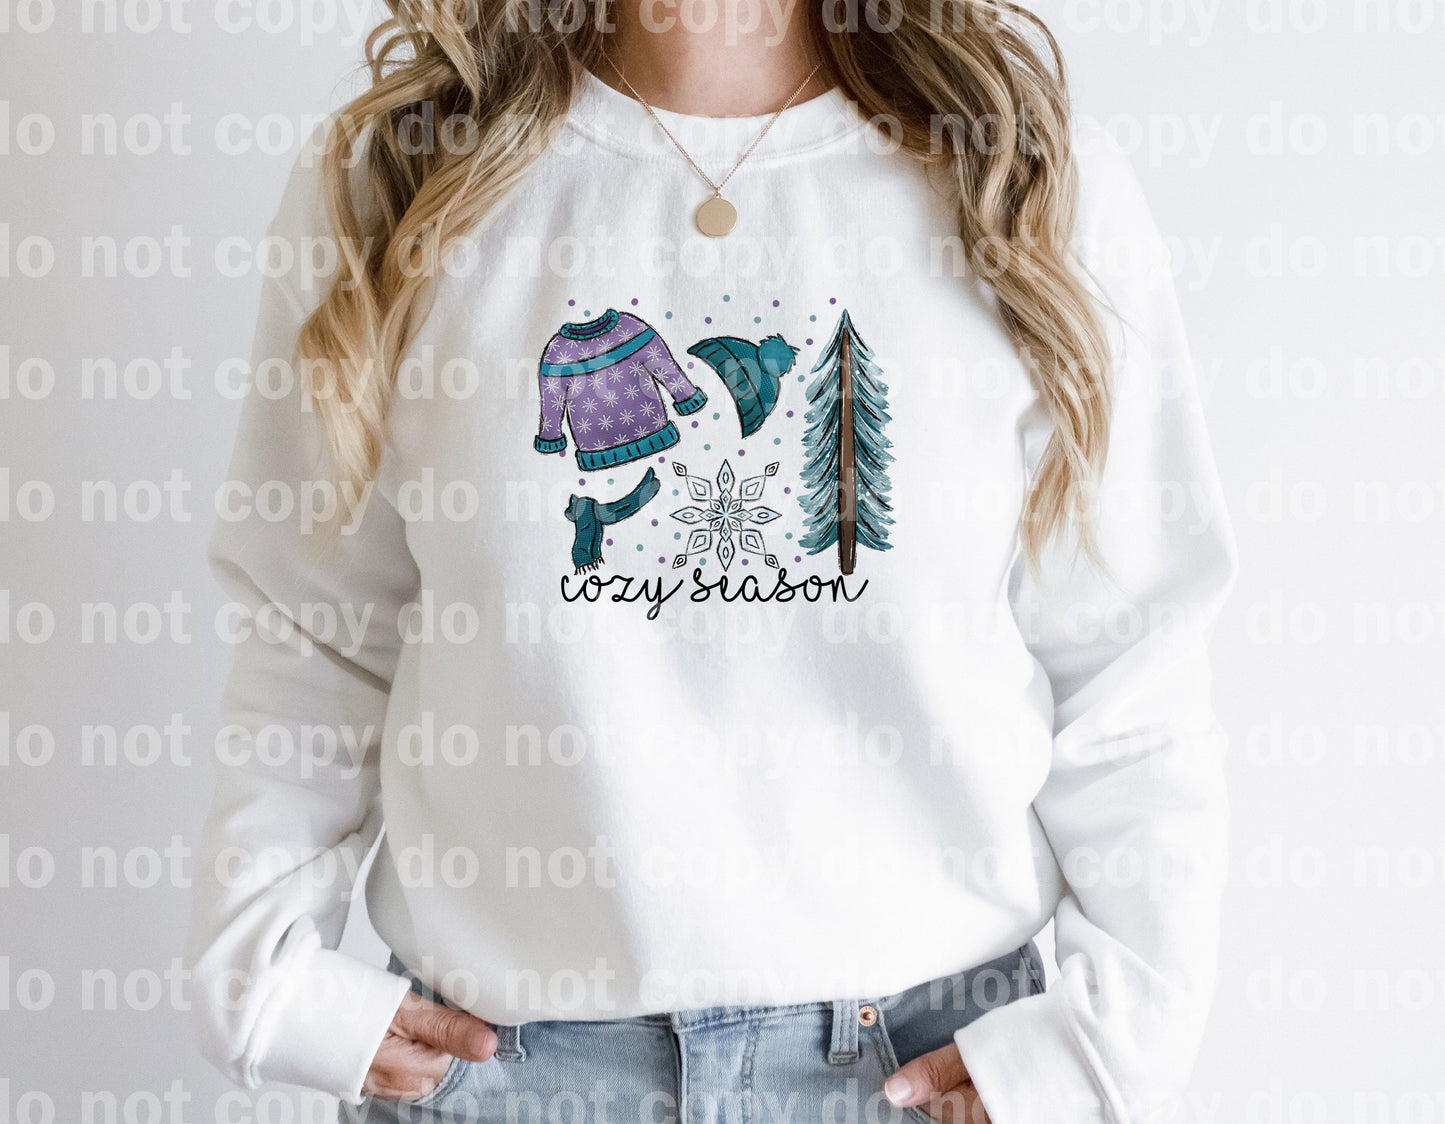 Cozy Season Sweater Dream Print or Sublimation Print